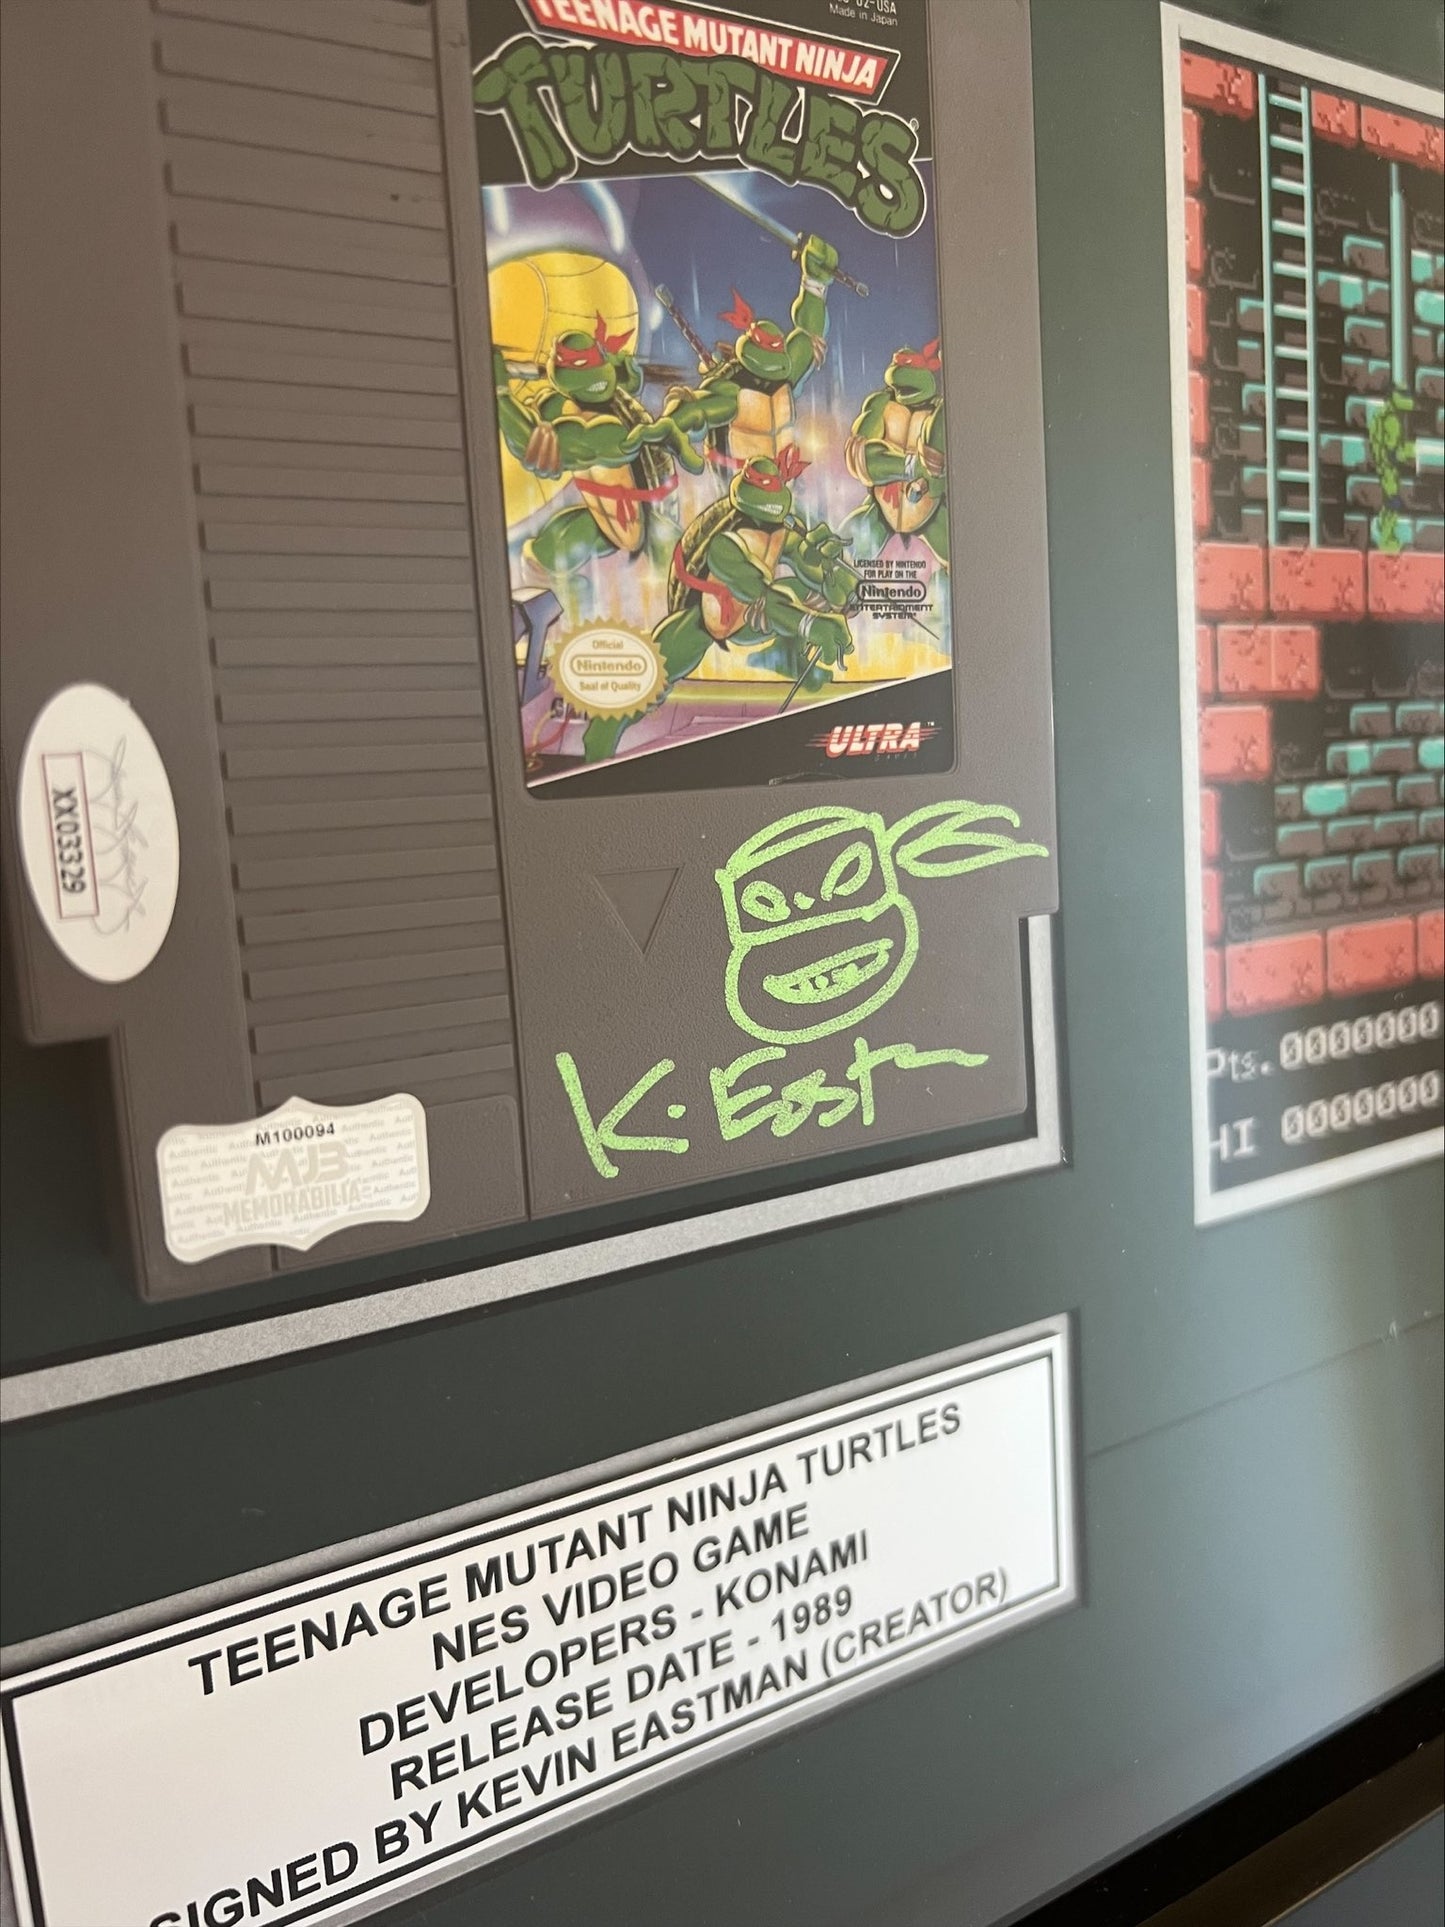 Kevin Eastman Signed Original 1989 Teenage Mutant Ninja Turtles Nintendo Game with Turtles sketch and JSA Authentication